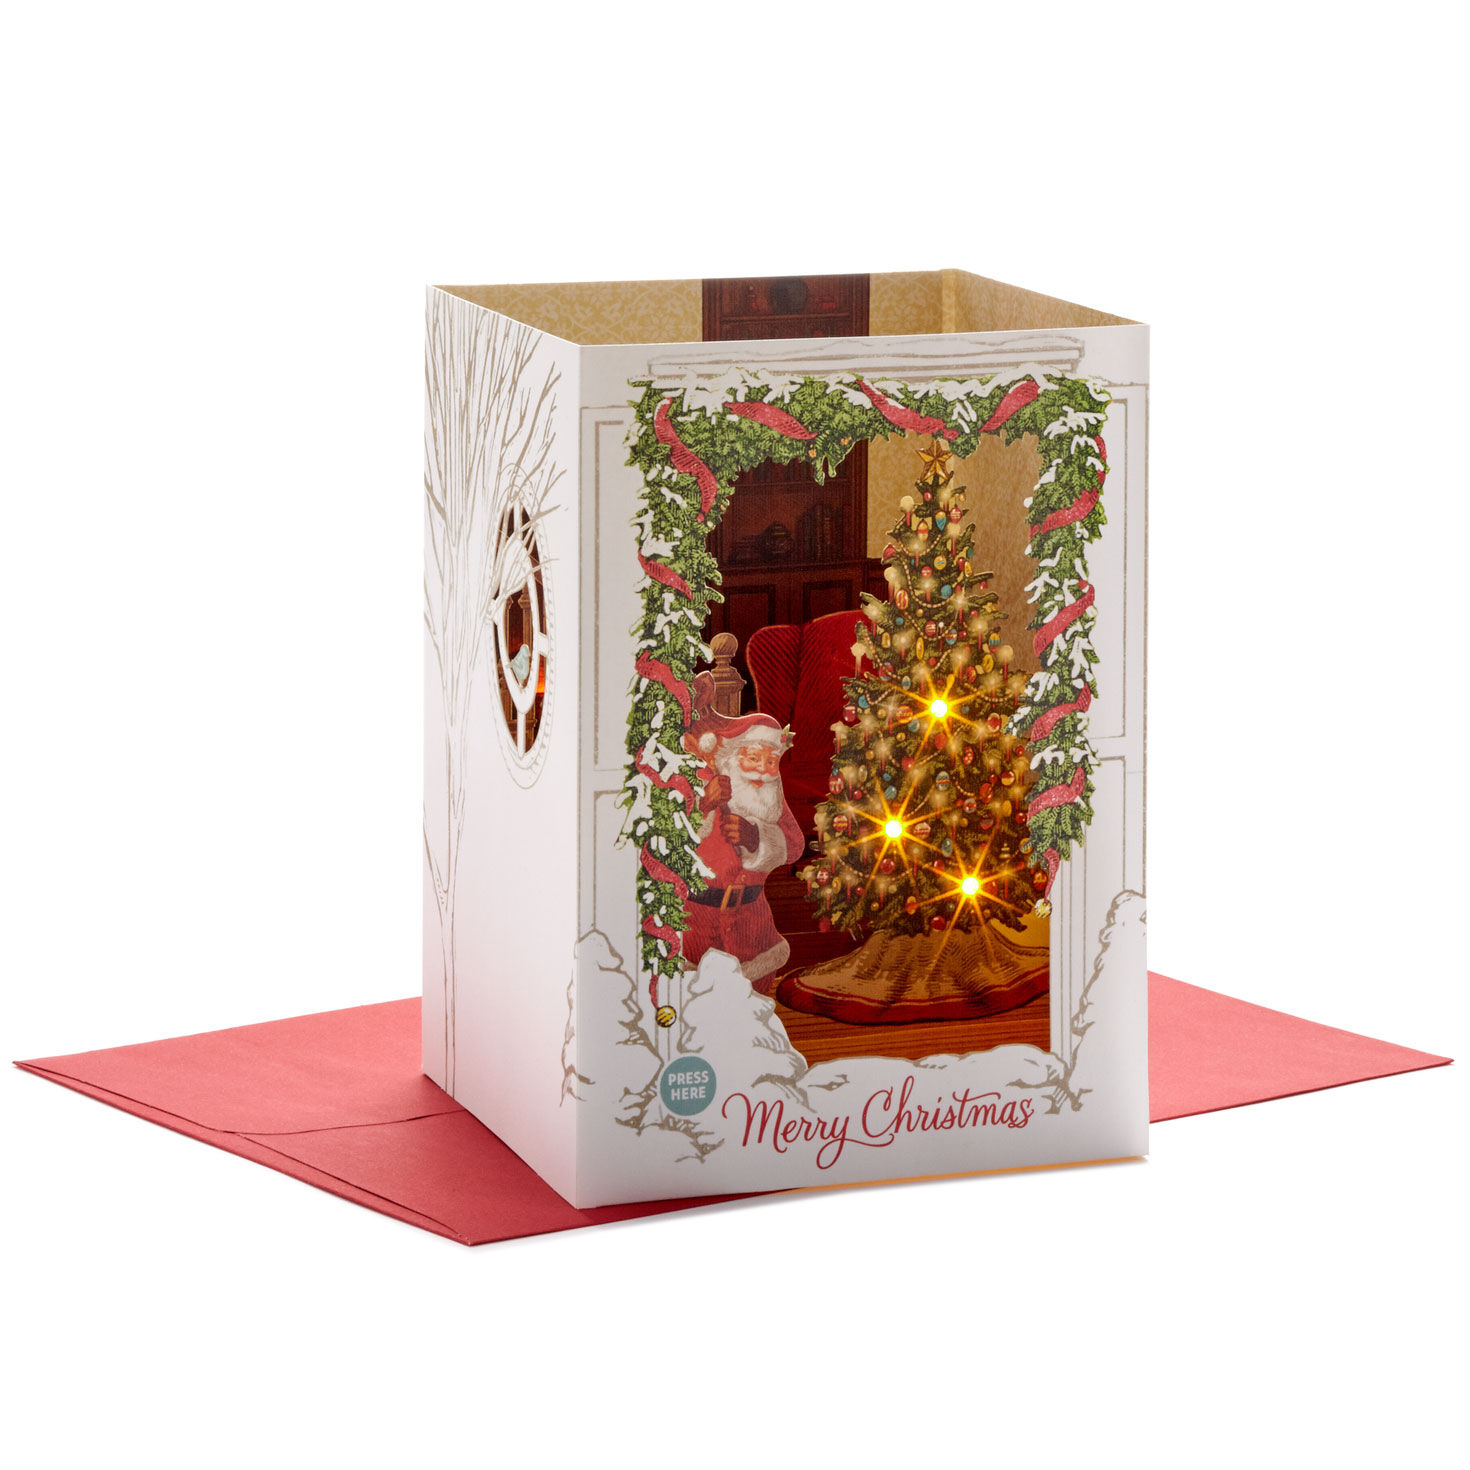 New Greeting Card Gift Card 3D PopUp Santa Claus Christmas Happy Holiday Card 86 